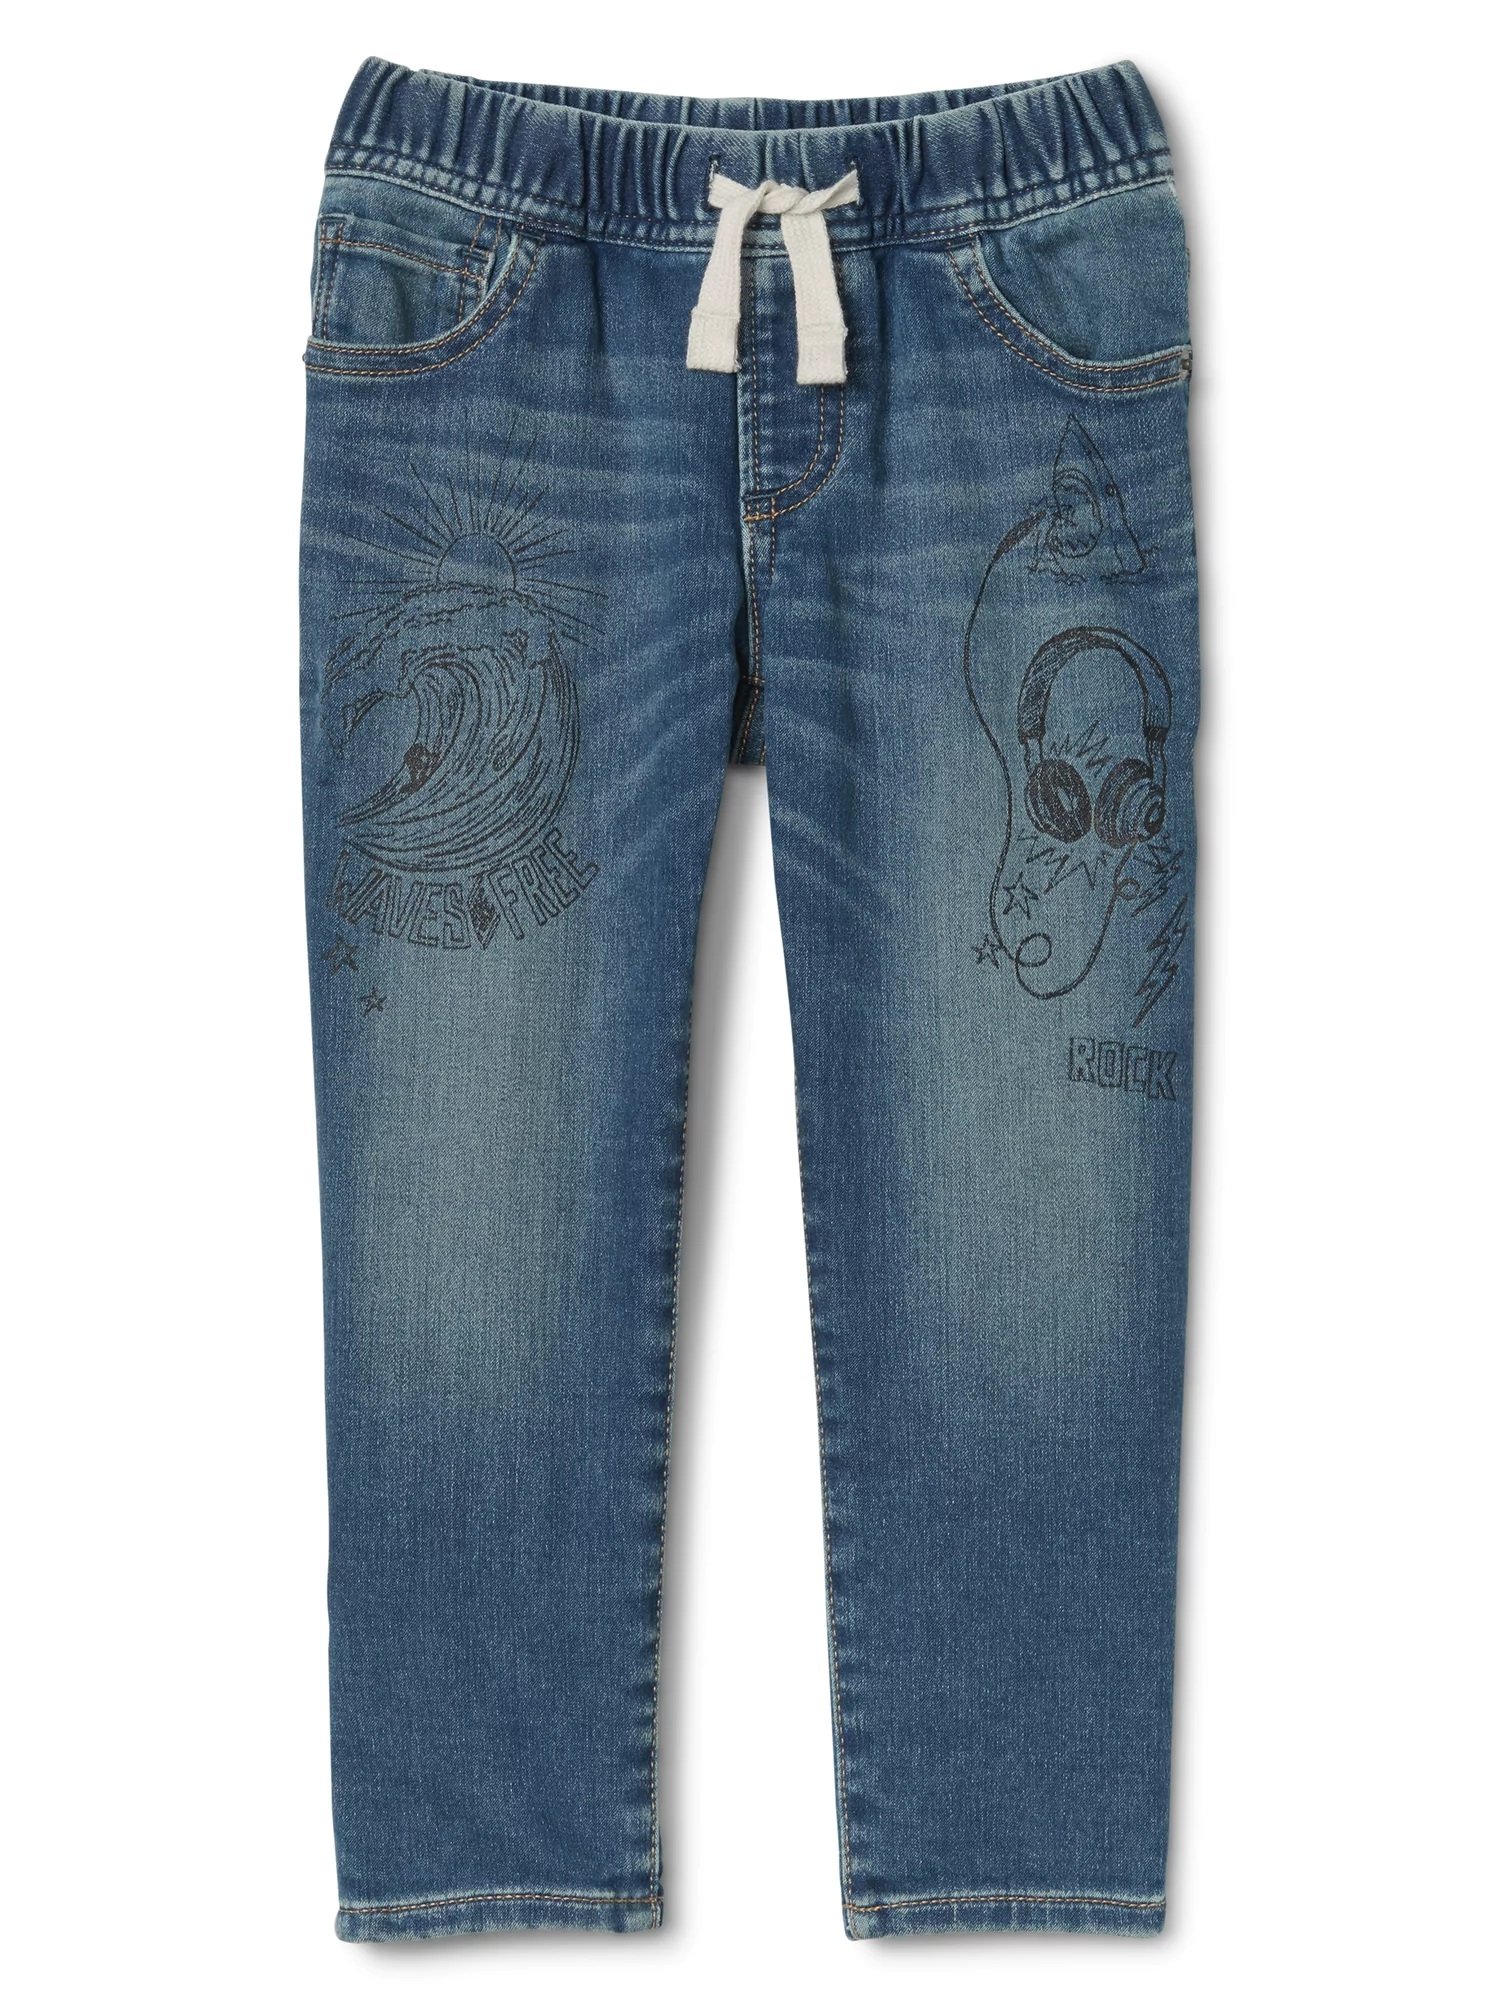 Superdenim Fantastiflex slim jean pantolon product image